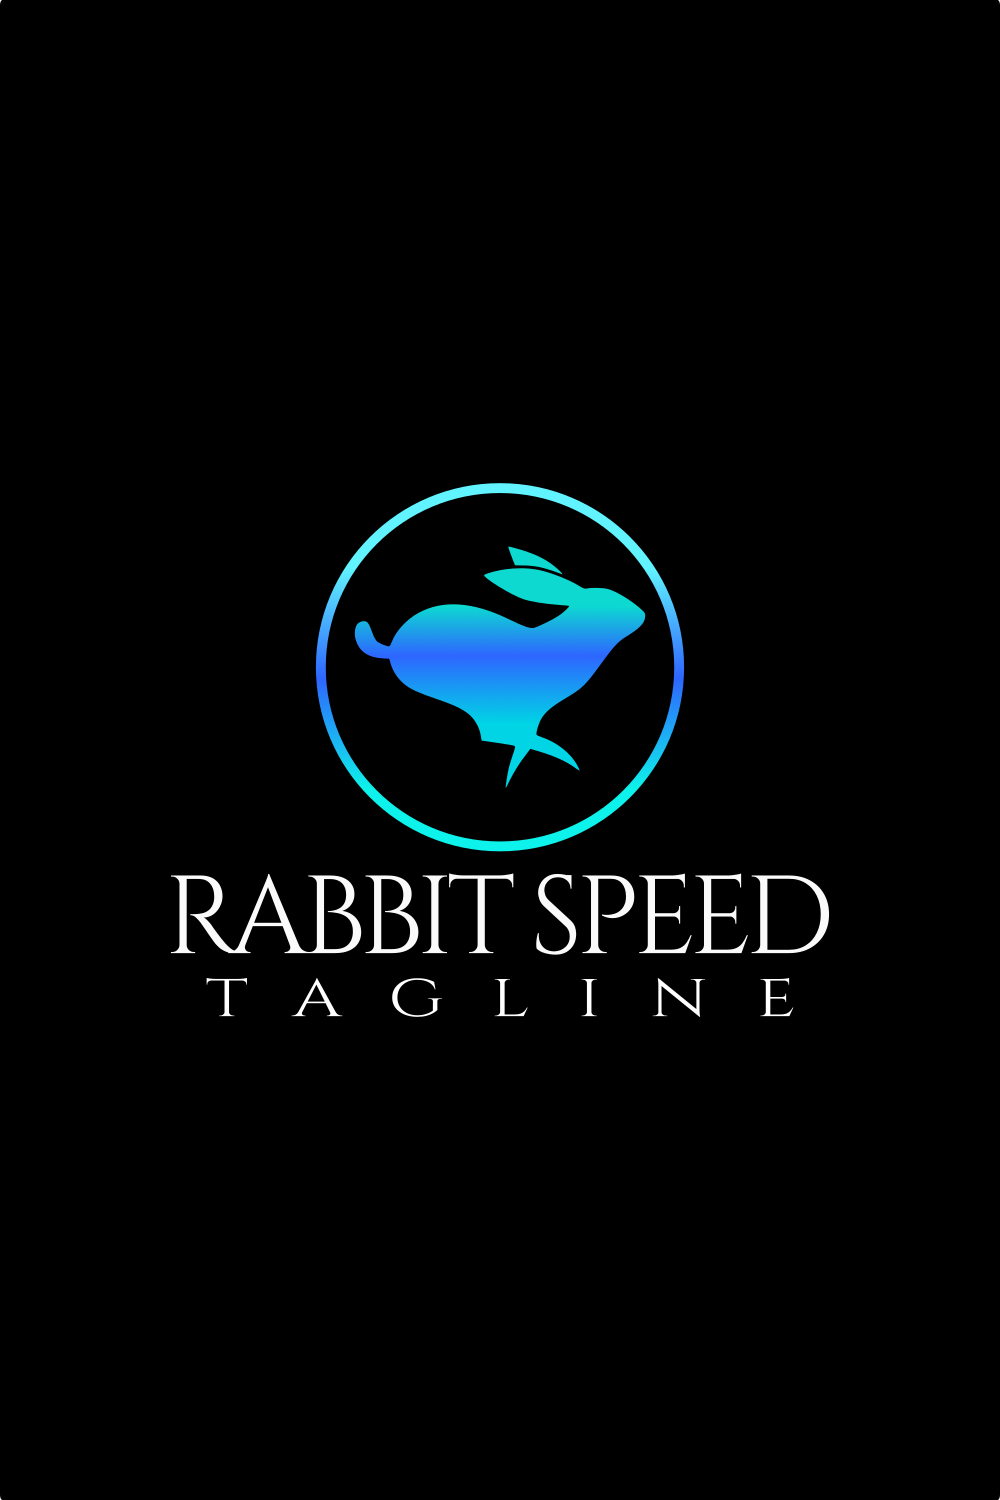 Rabbit Speed Custom Logo Design pinterest image.